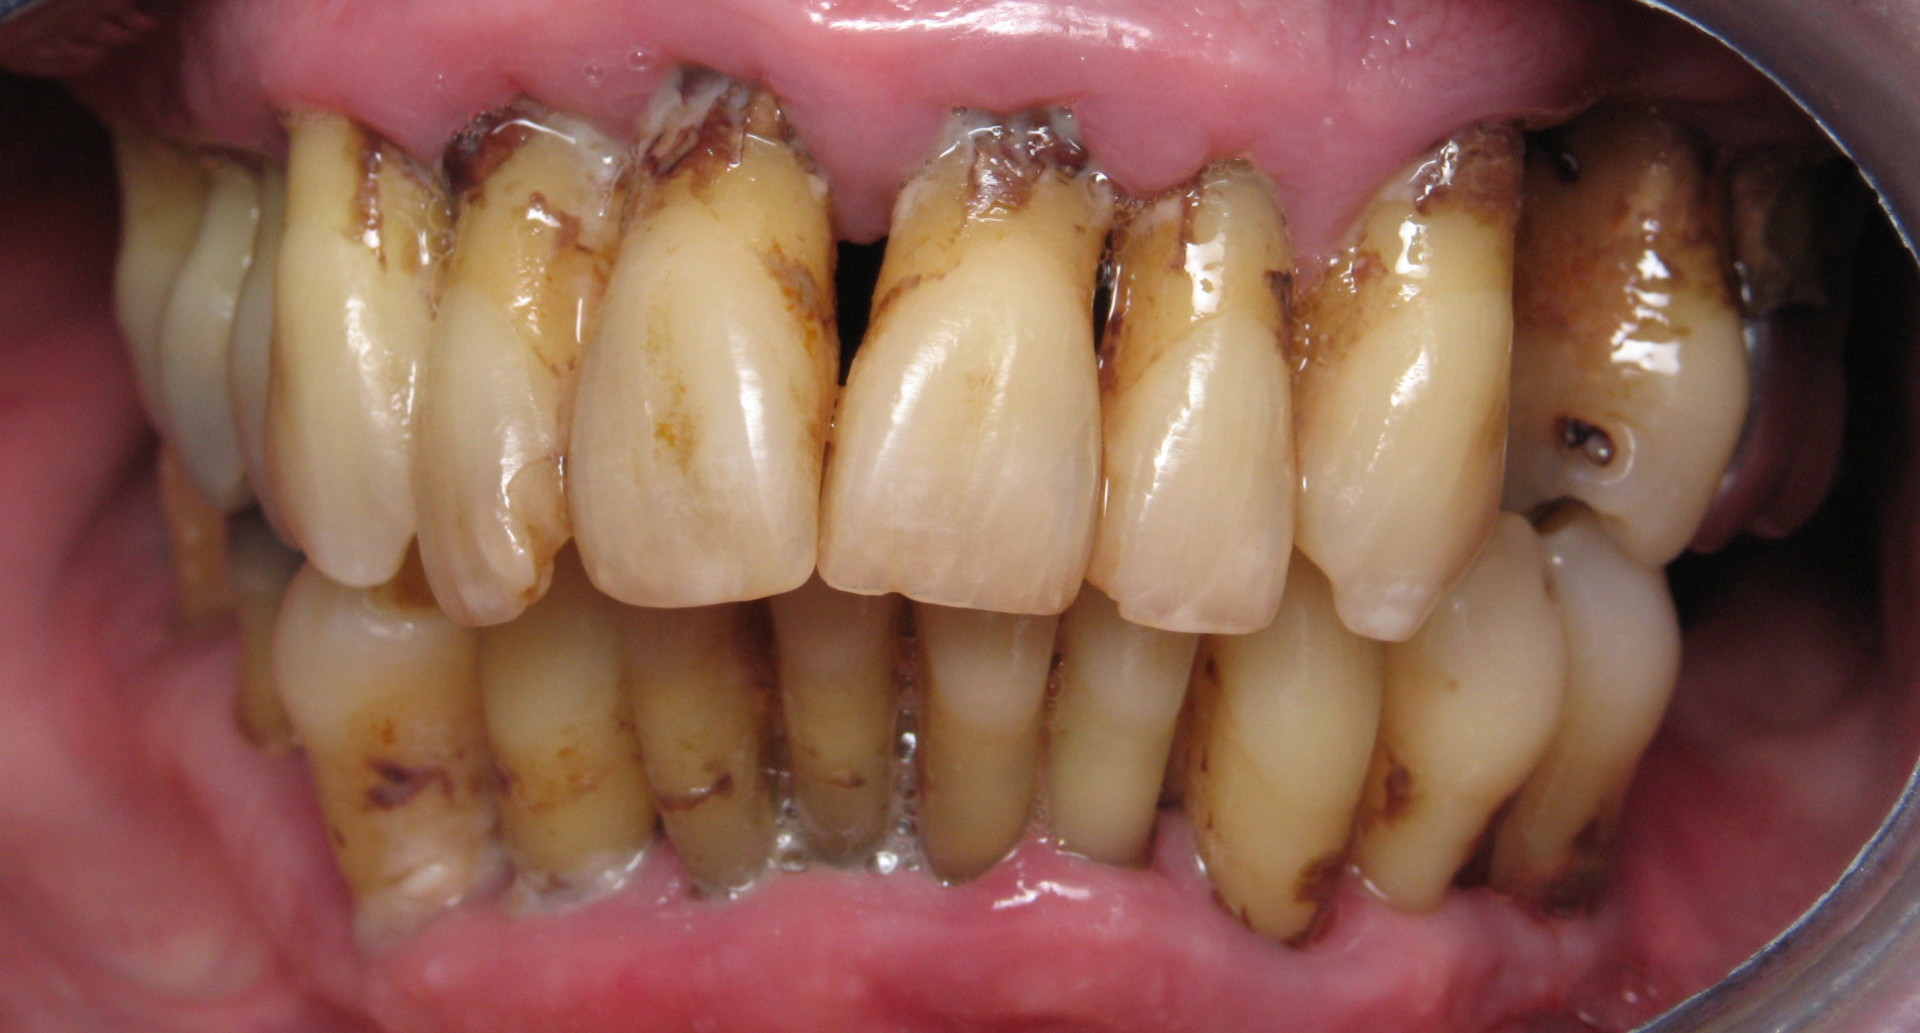 1. état parodontal initial